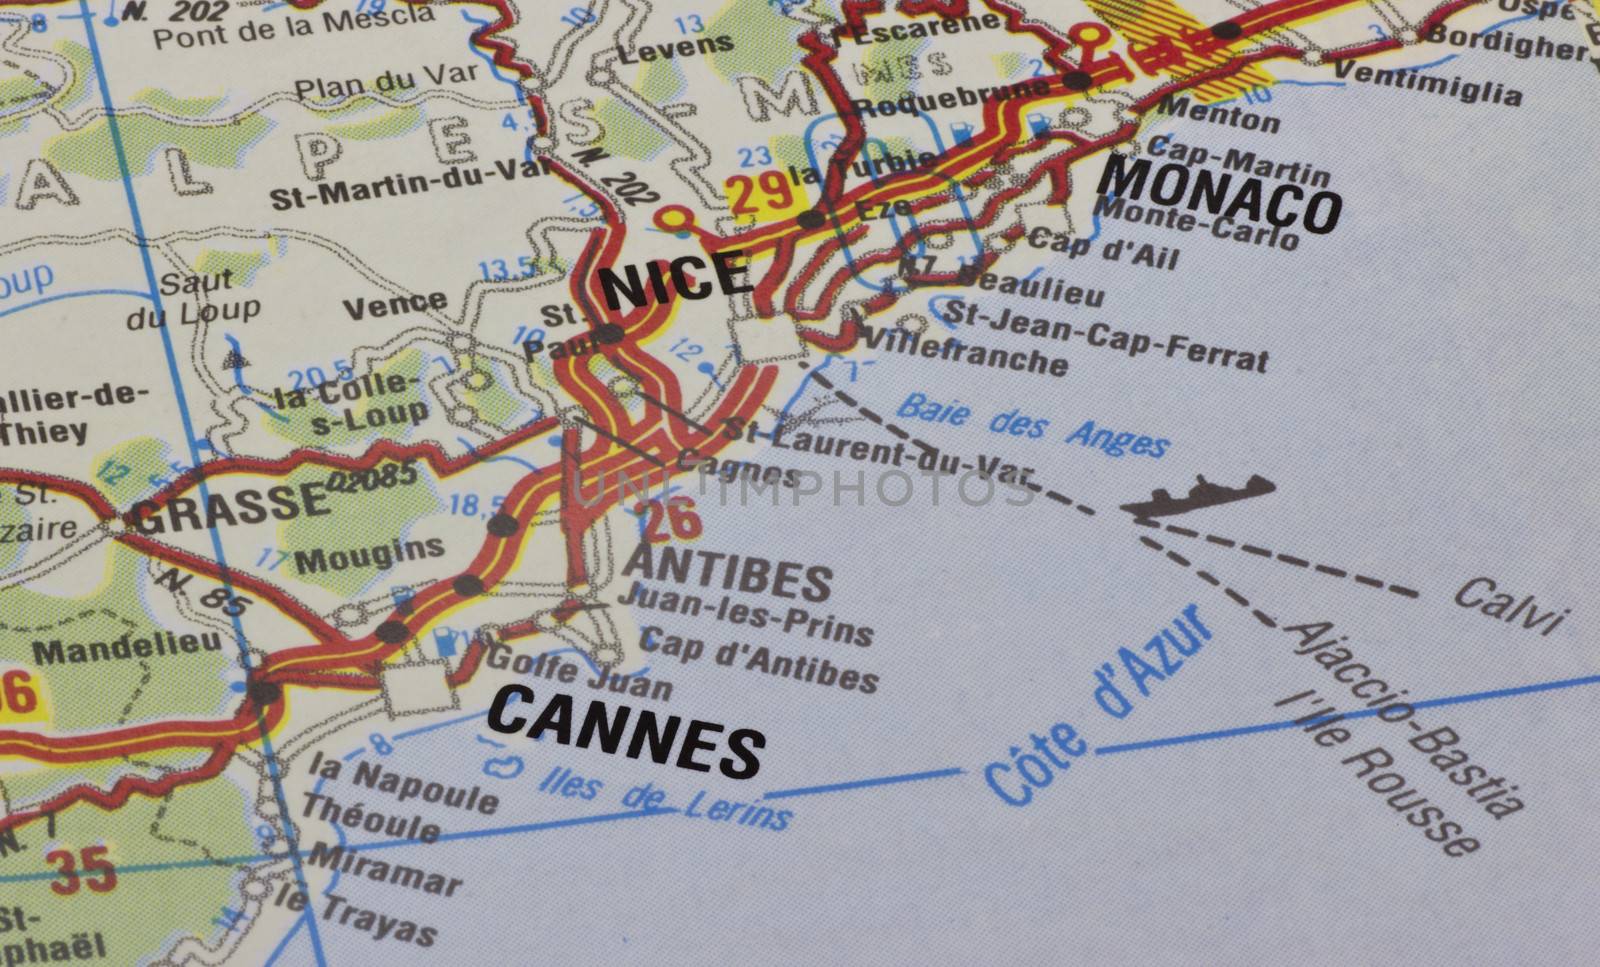 Cote d'Azur map by jurgenfr